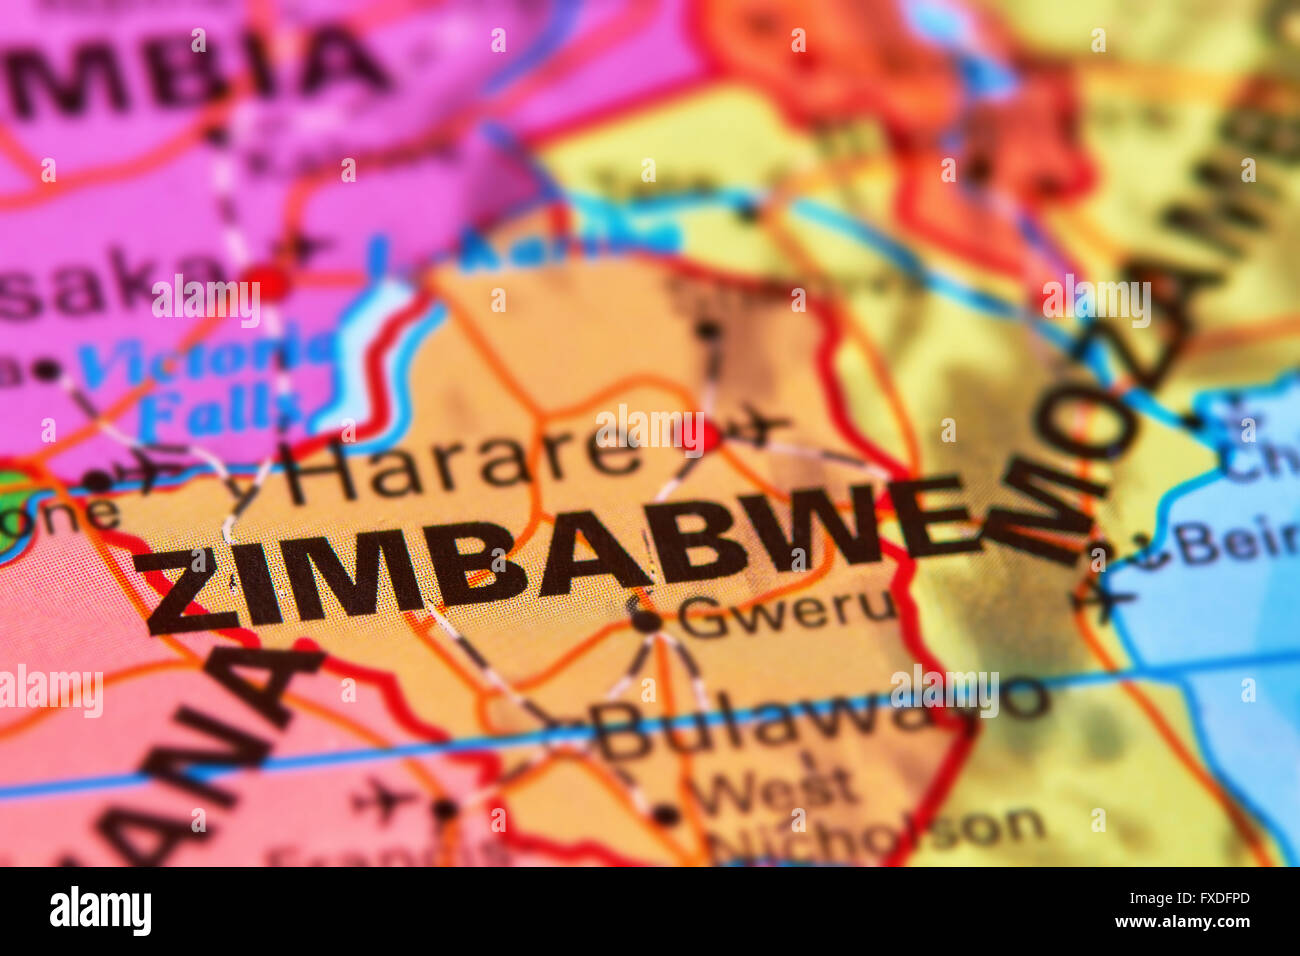 Zimbabwe Country on the World Map Stock Photo